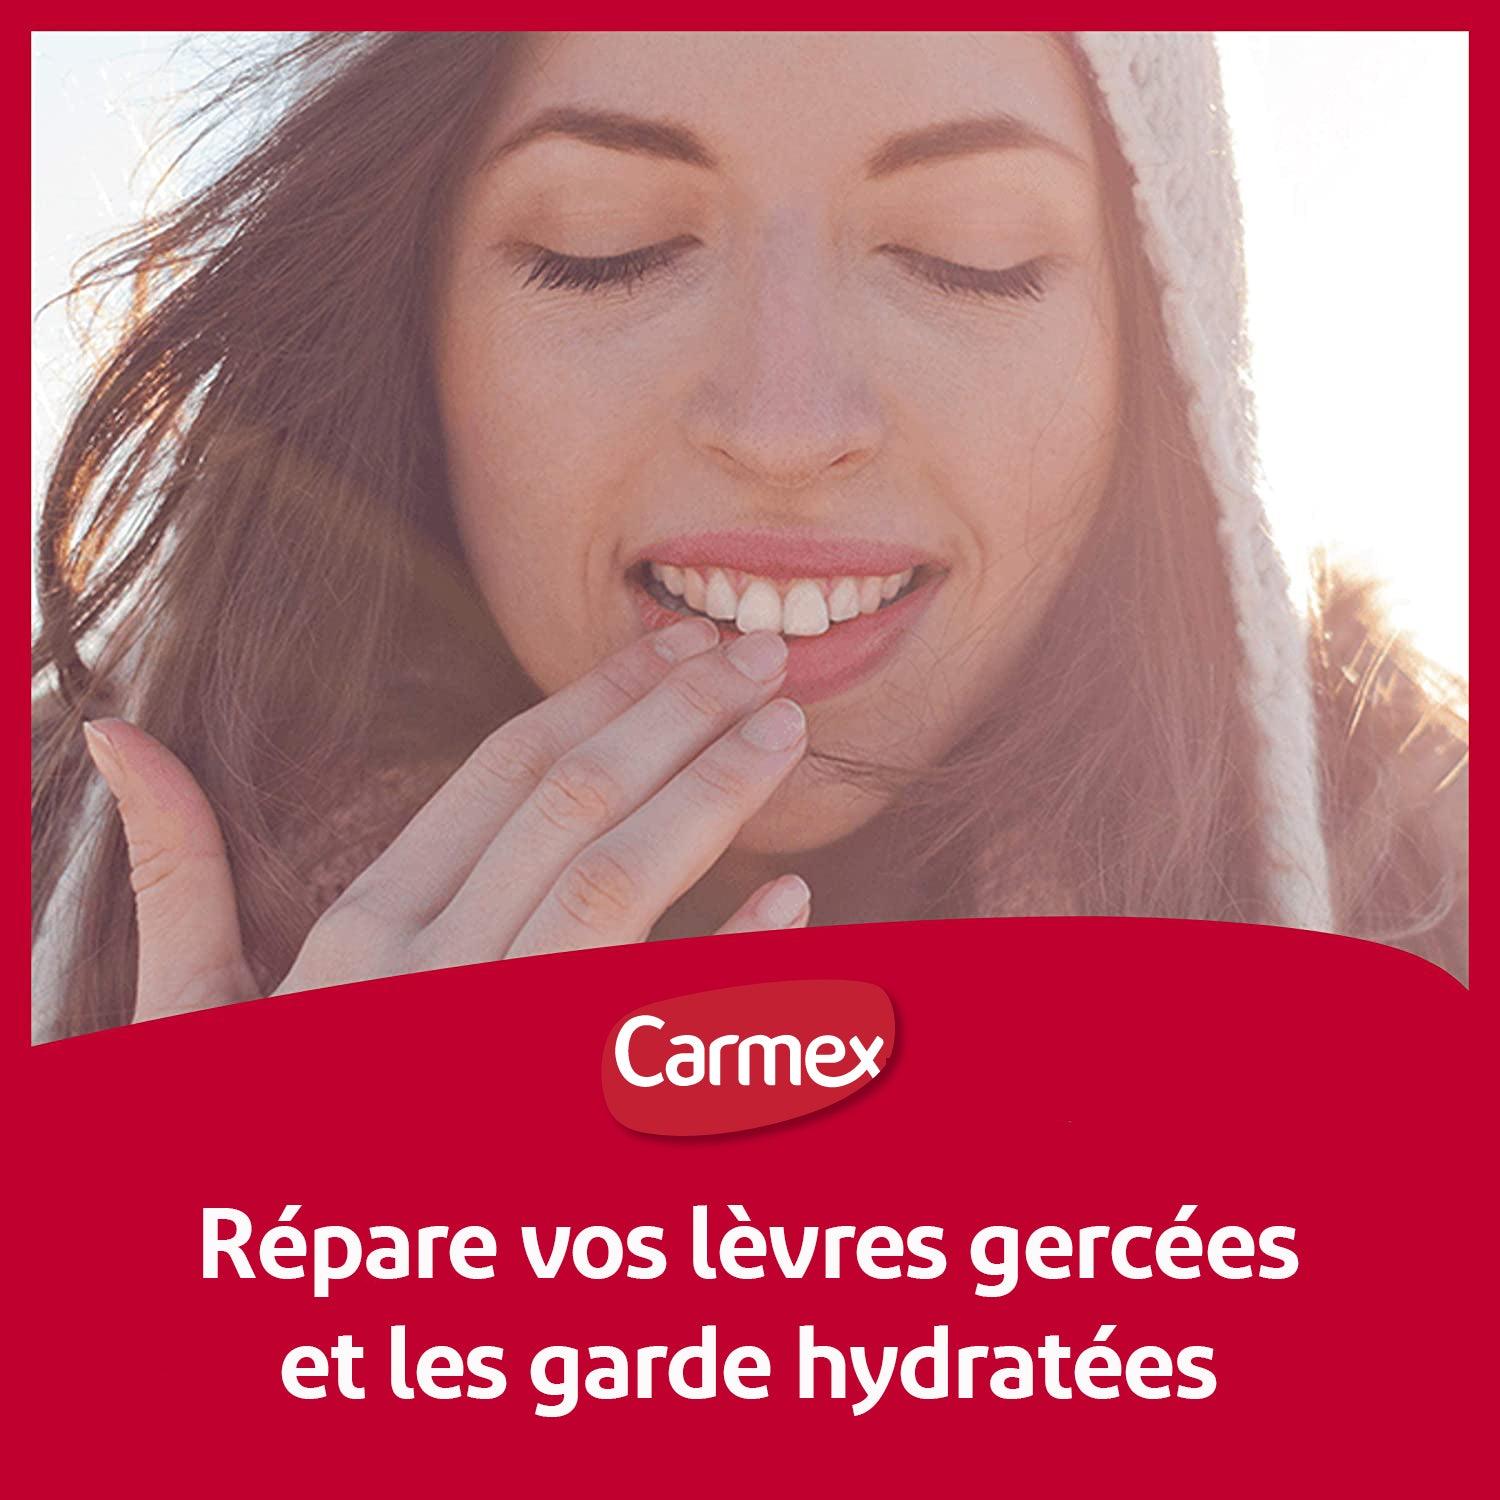 Carmex Baume à Lèvres Classique Pot 7.5g - mondialpharma.com